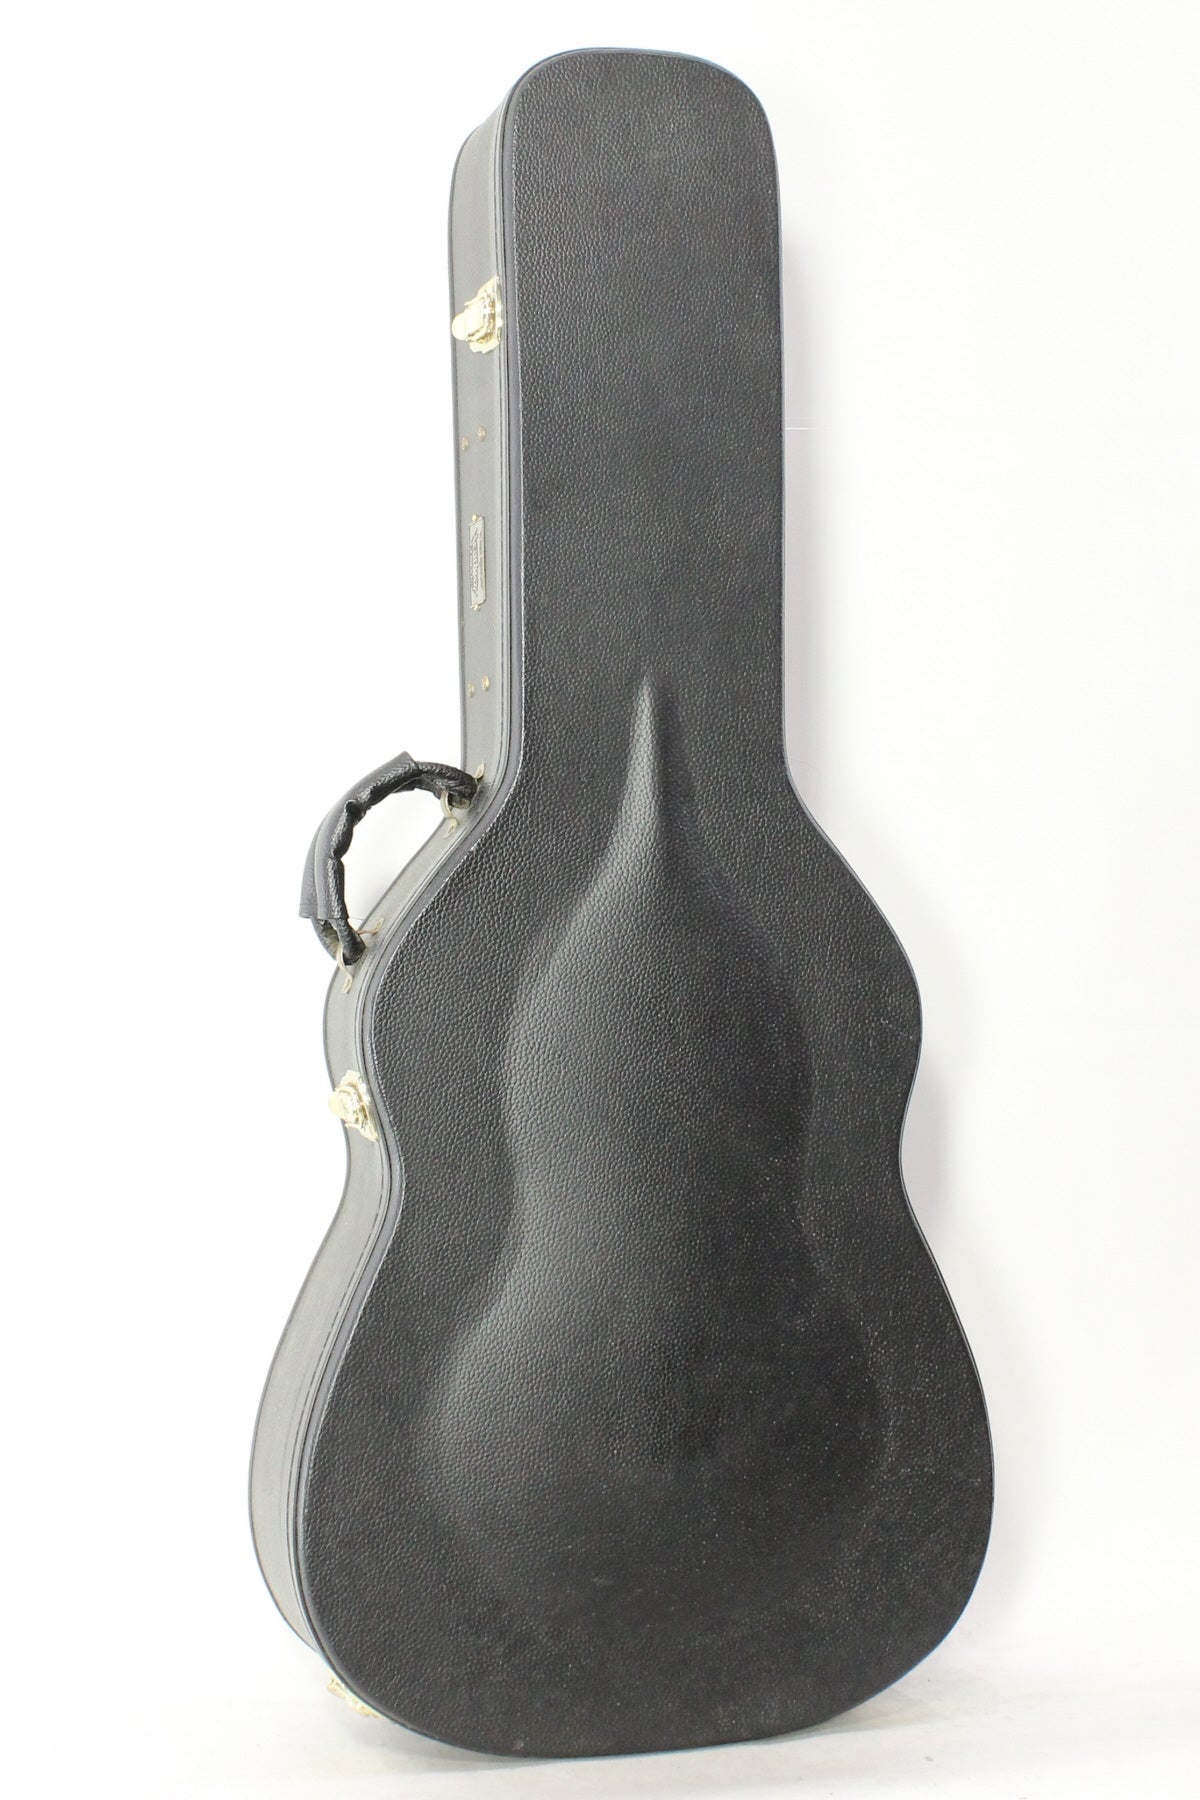 [SN S00522] USED HEADWAY / HJ-523/STD Sunburst [Made in Japan] Headway Acoustic Guitar Acoustic Guitar Folk Guitar [08]